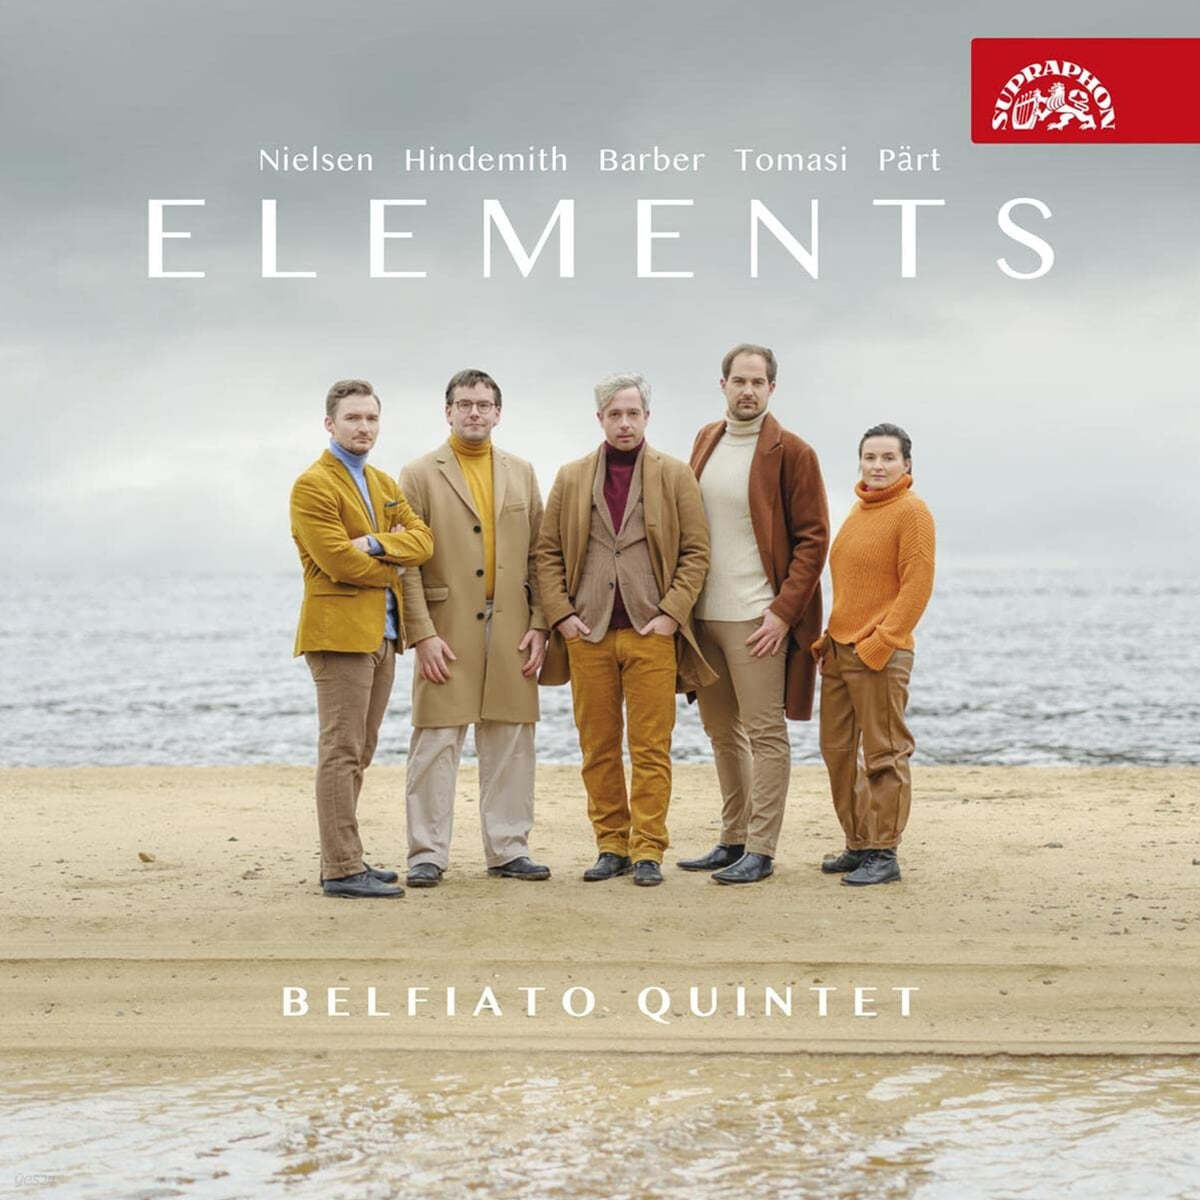 Belfiato Quintet 20세기 관악 실내악 걸작 모음집 (Elements) 